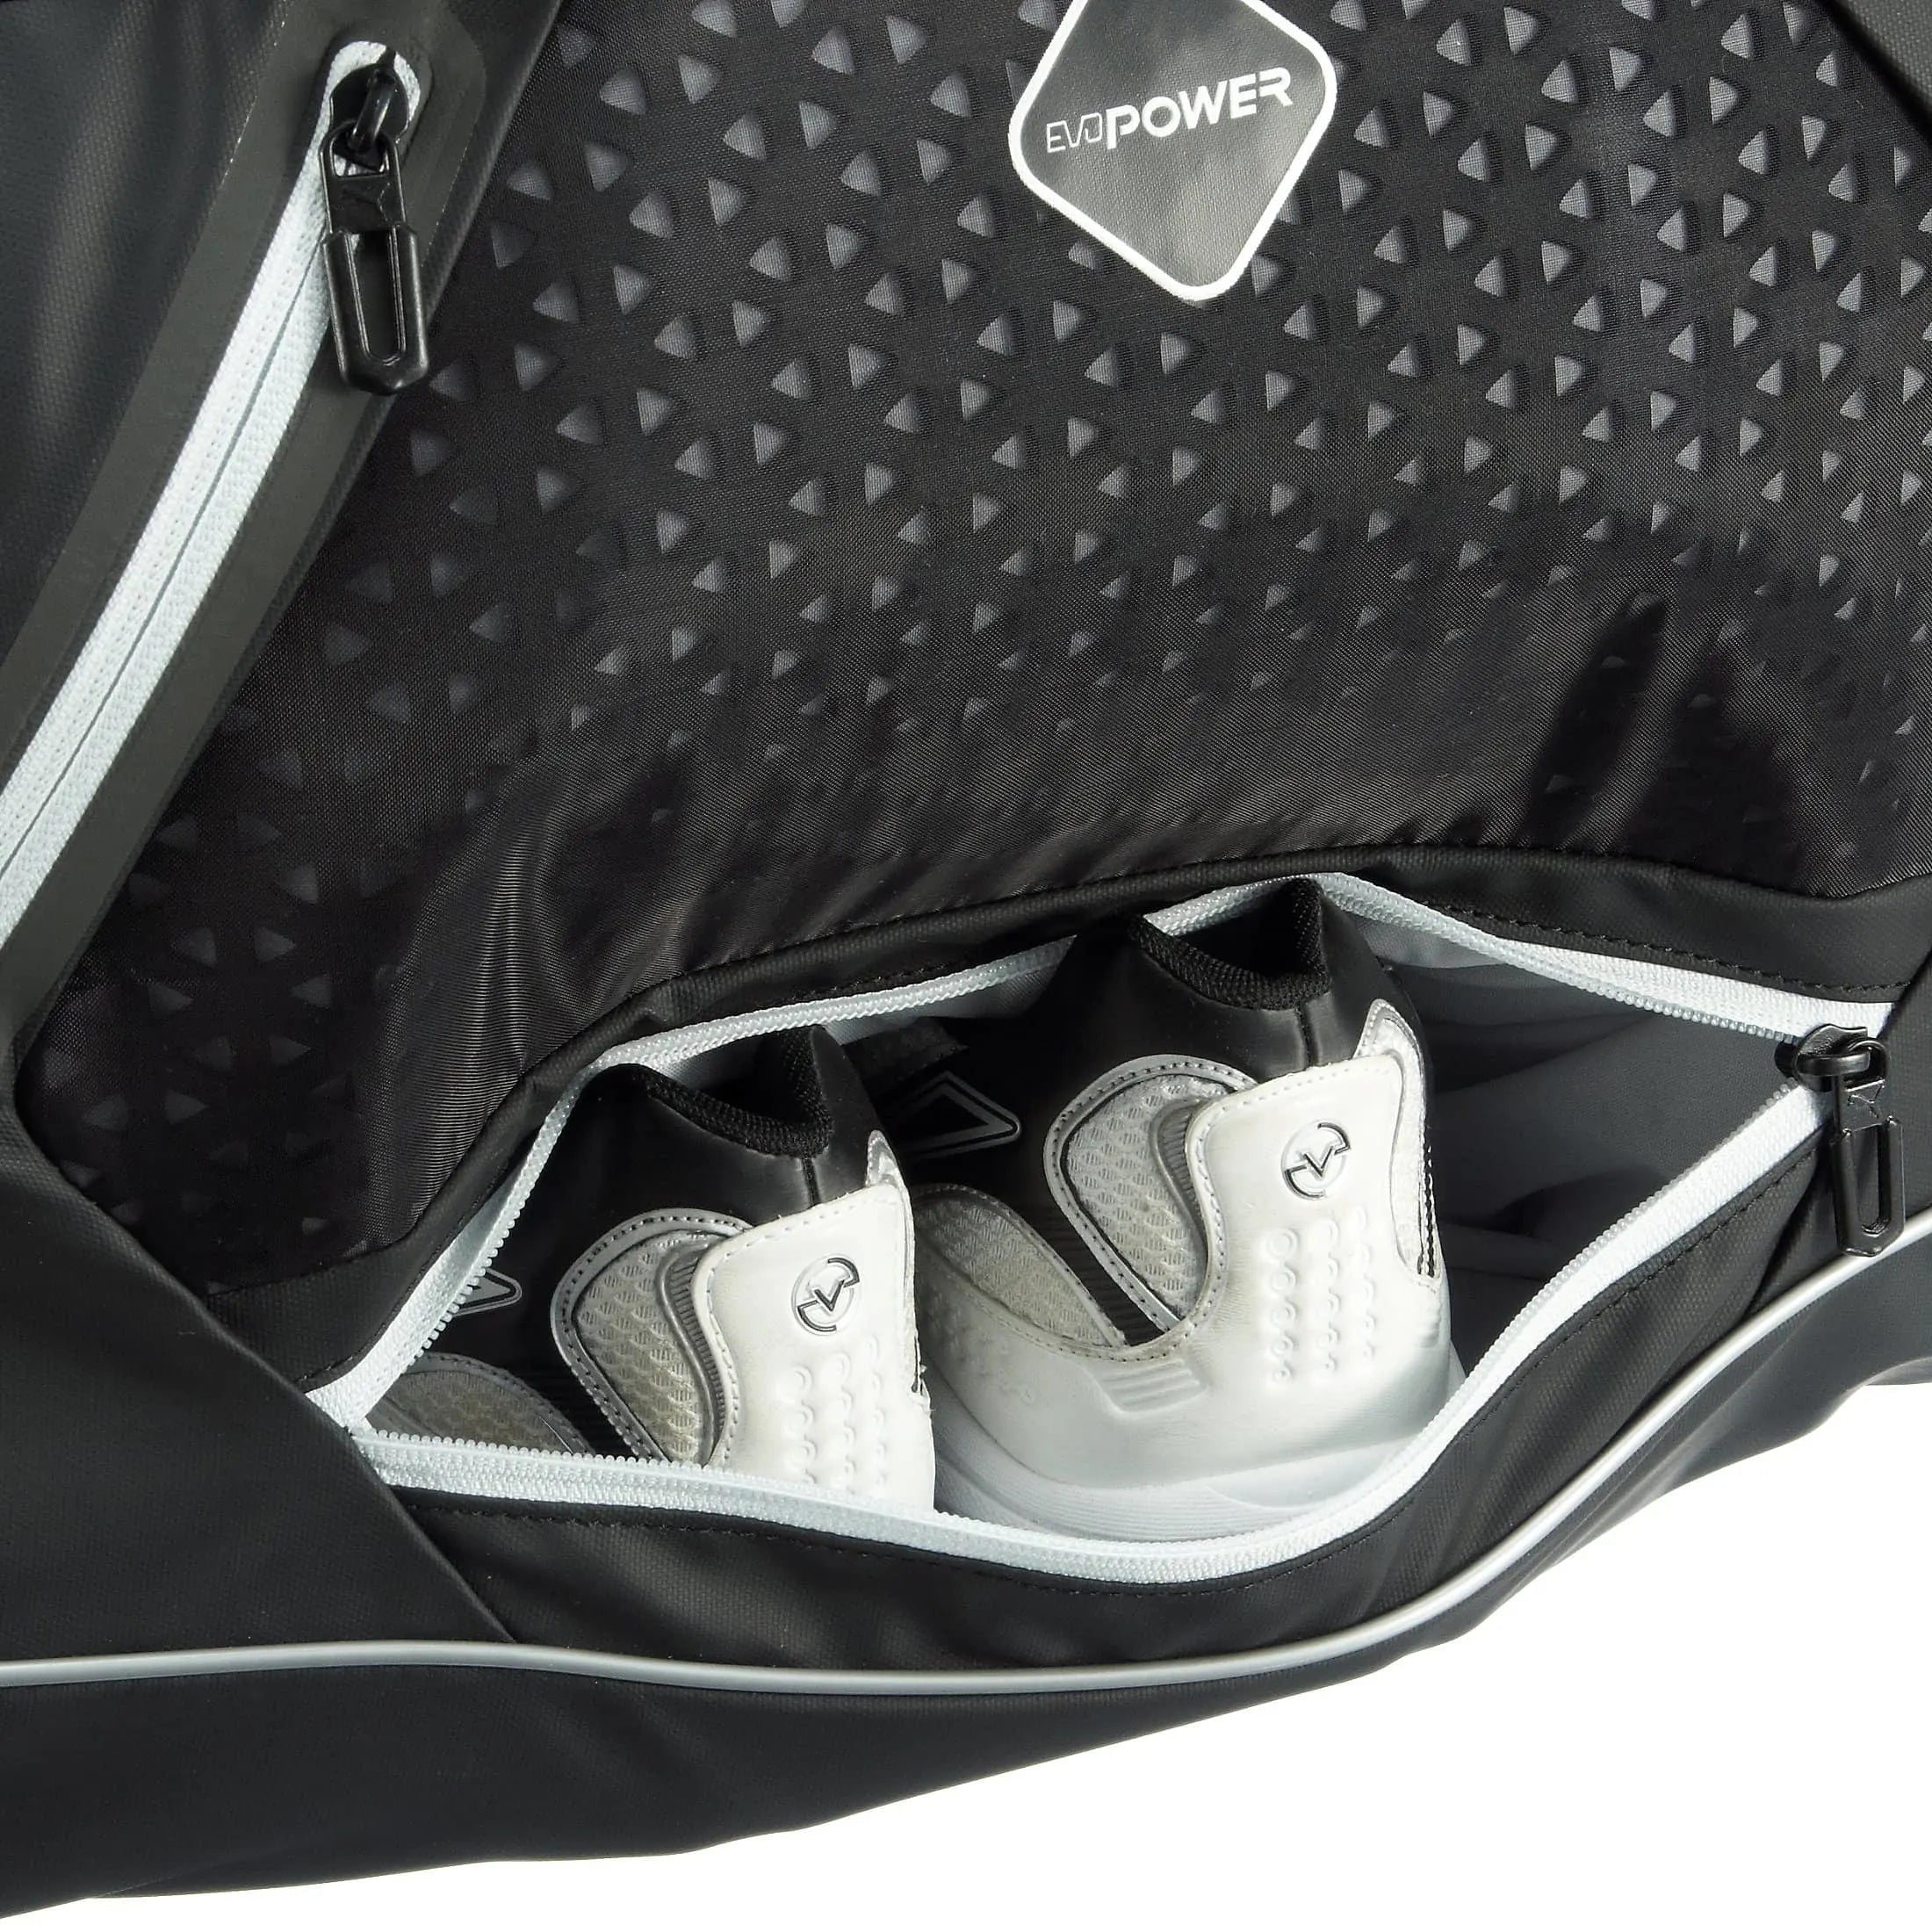 Puma evoPOWER Premium Medium Bag Sporttasche 55 cm - black